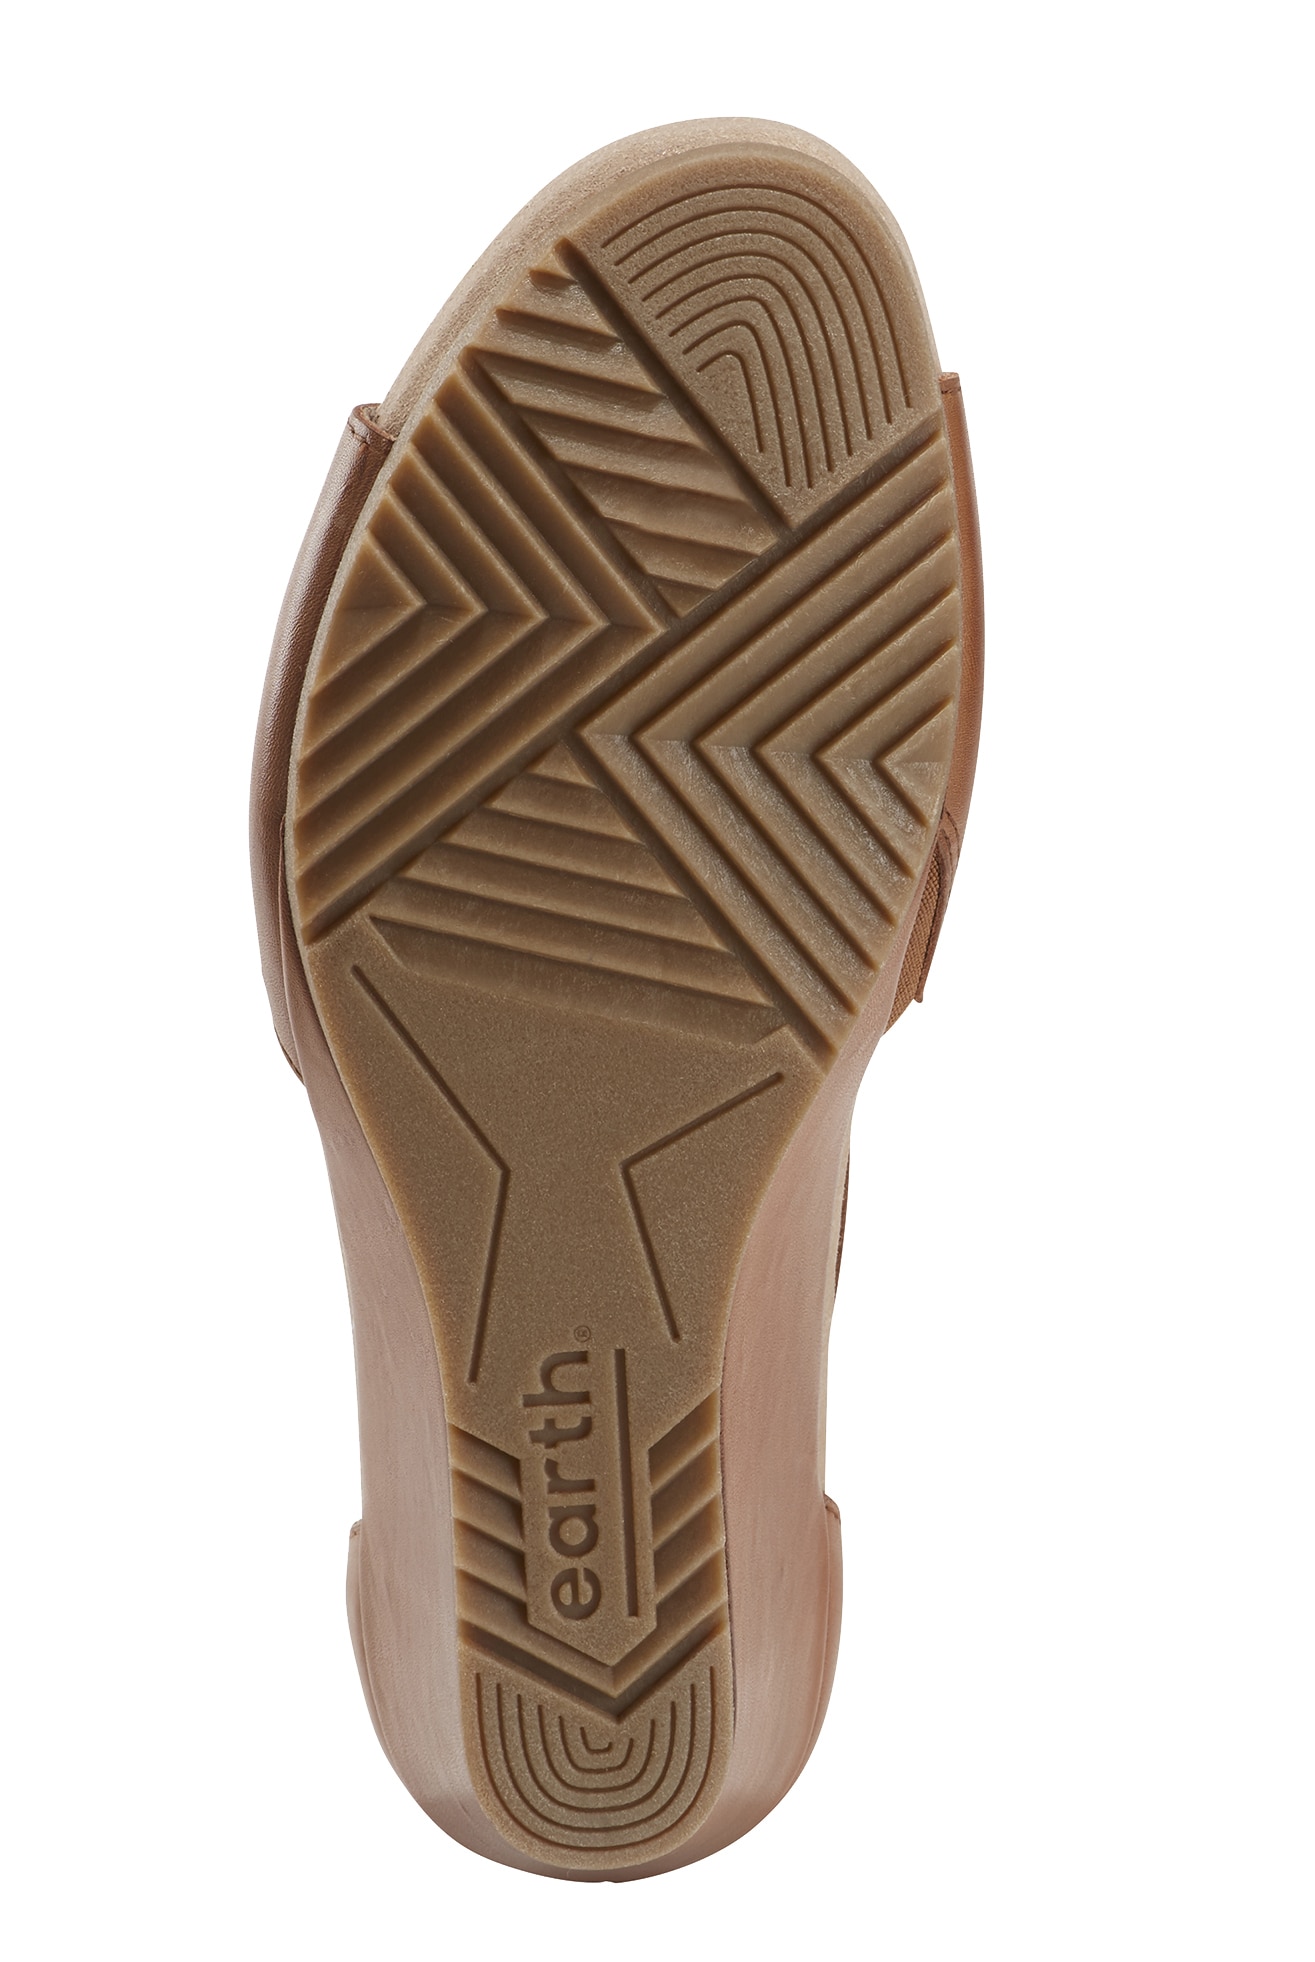 earth shoes attalea barbuda